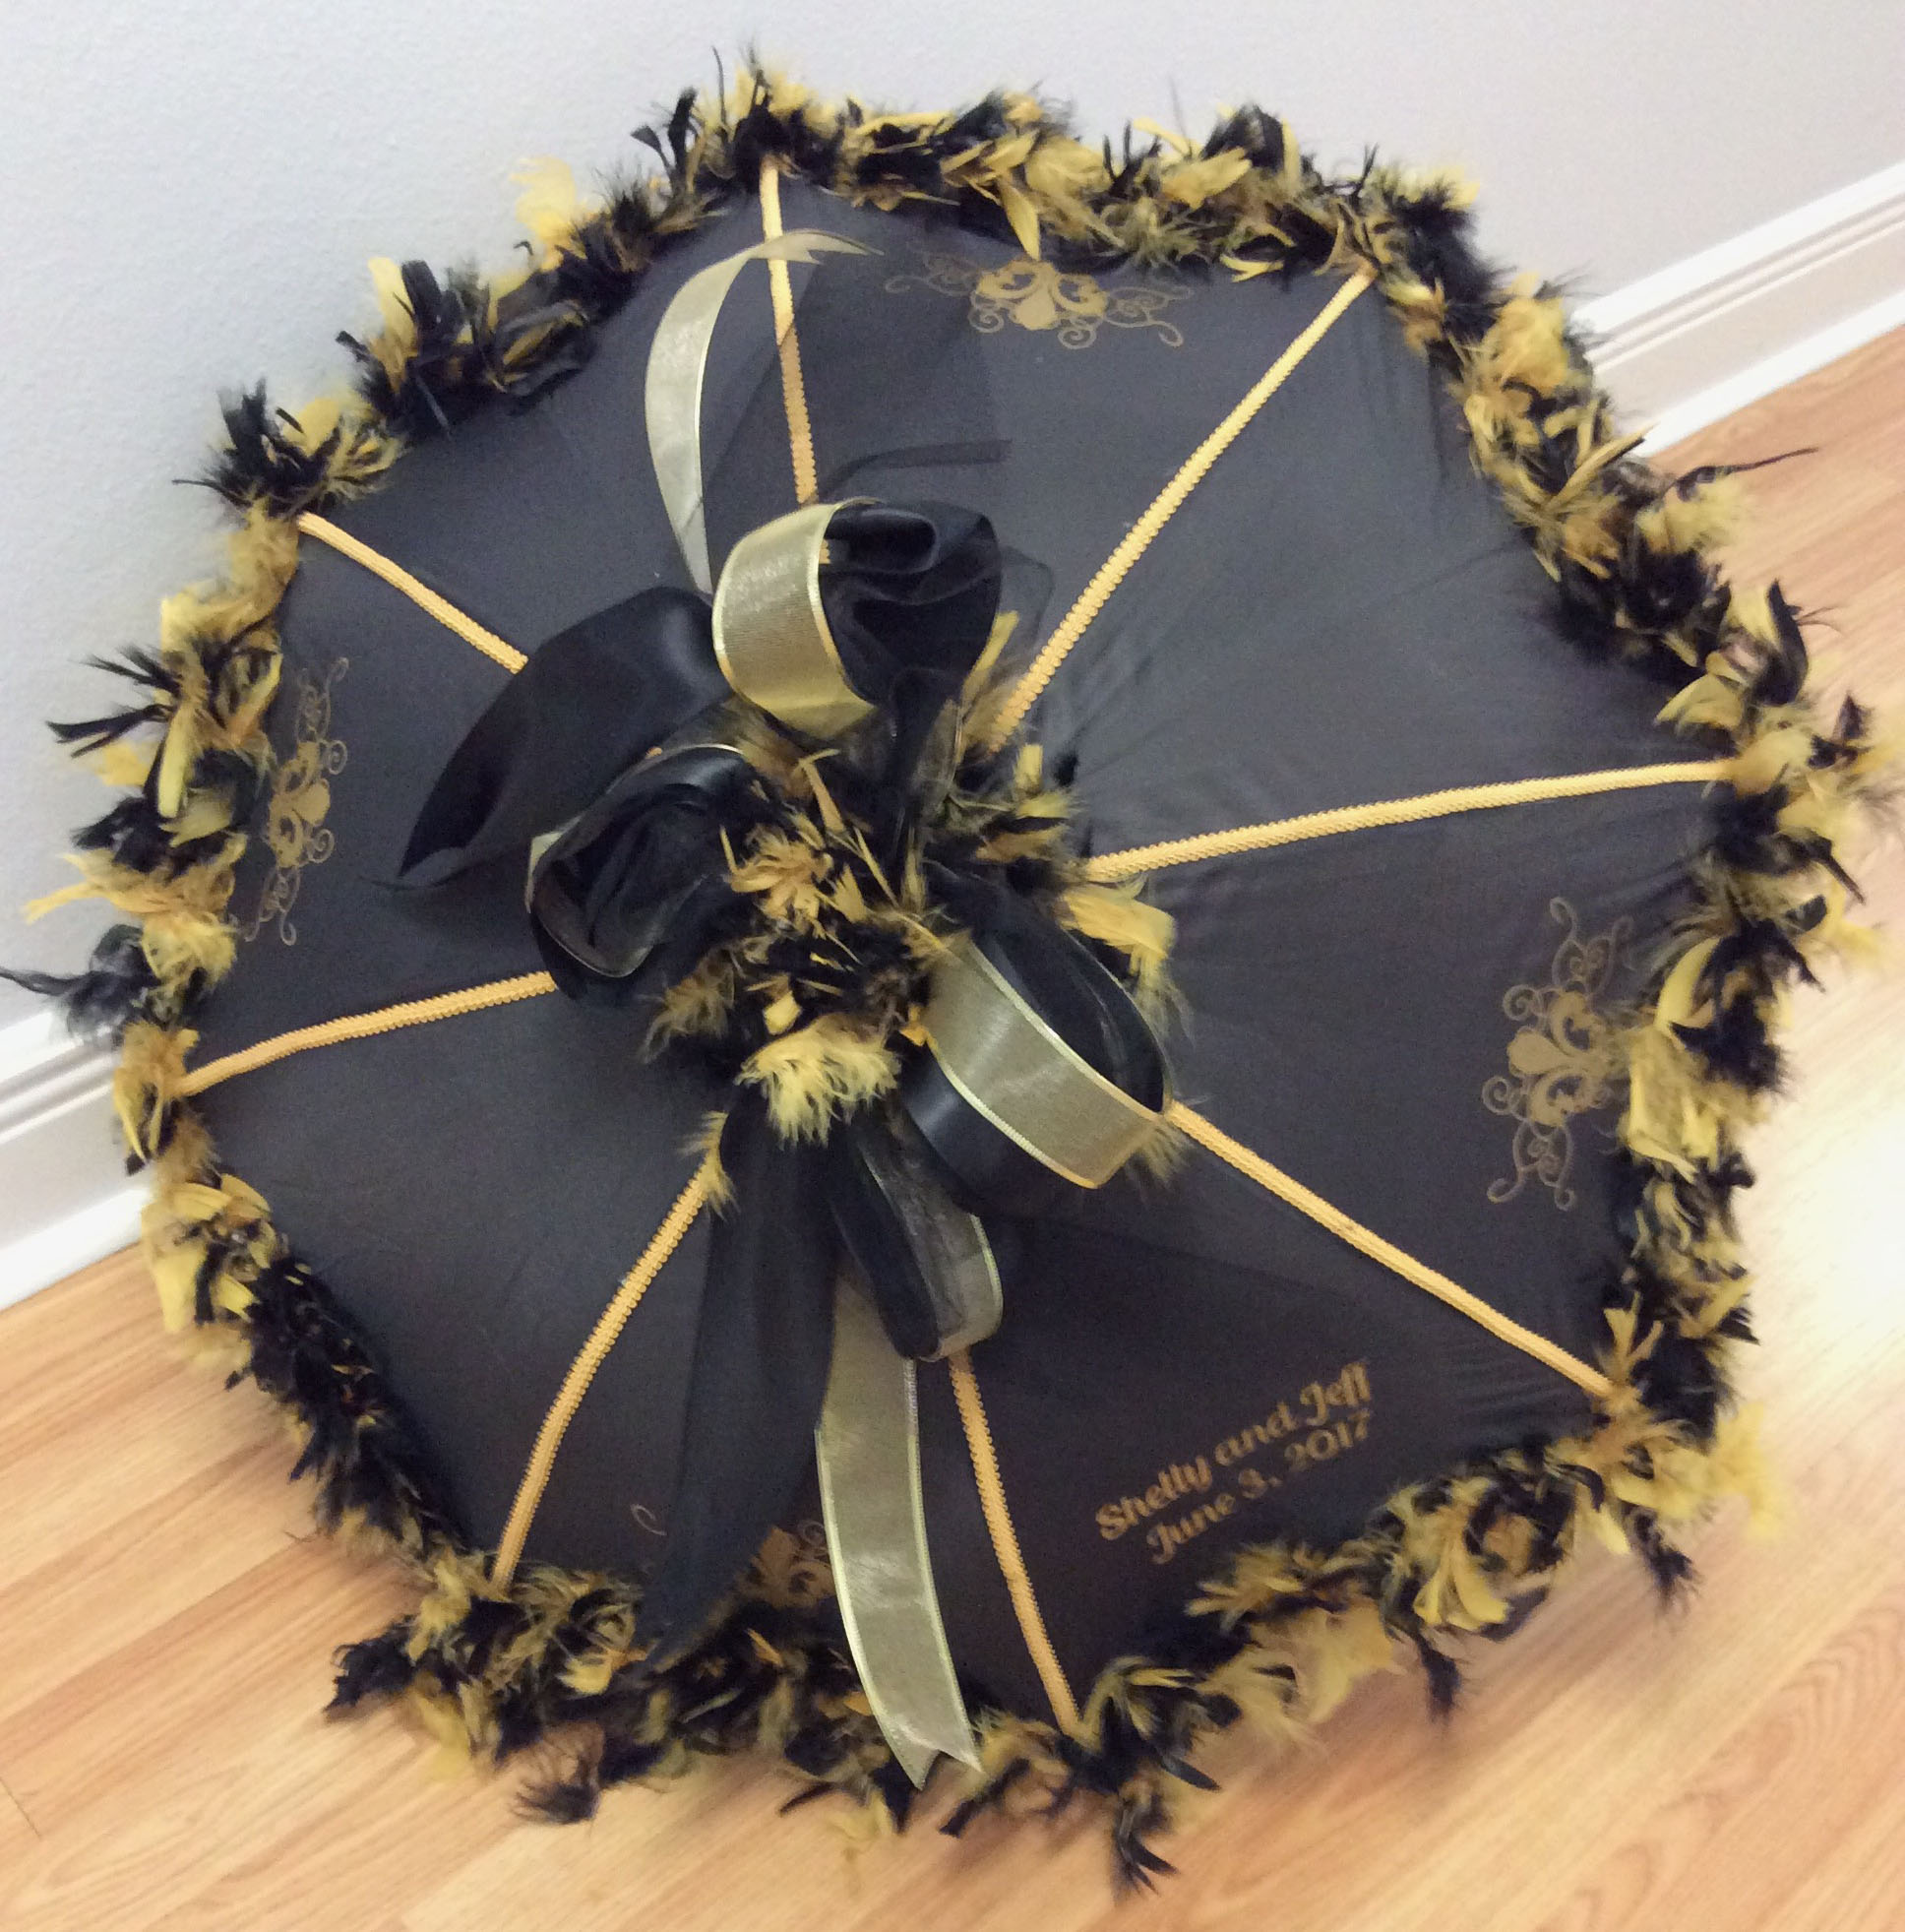 Black Umbrella with Gold Ribs and black boa